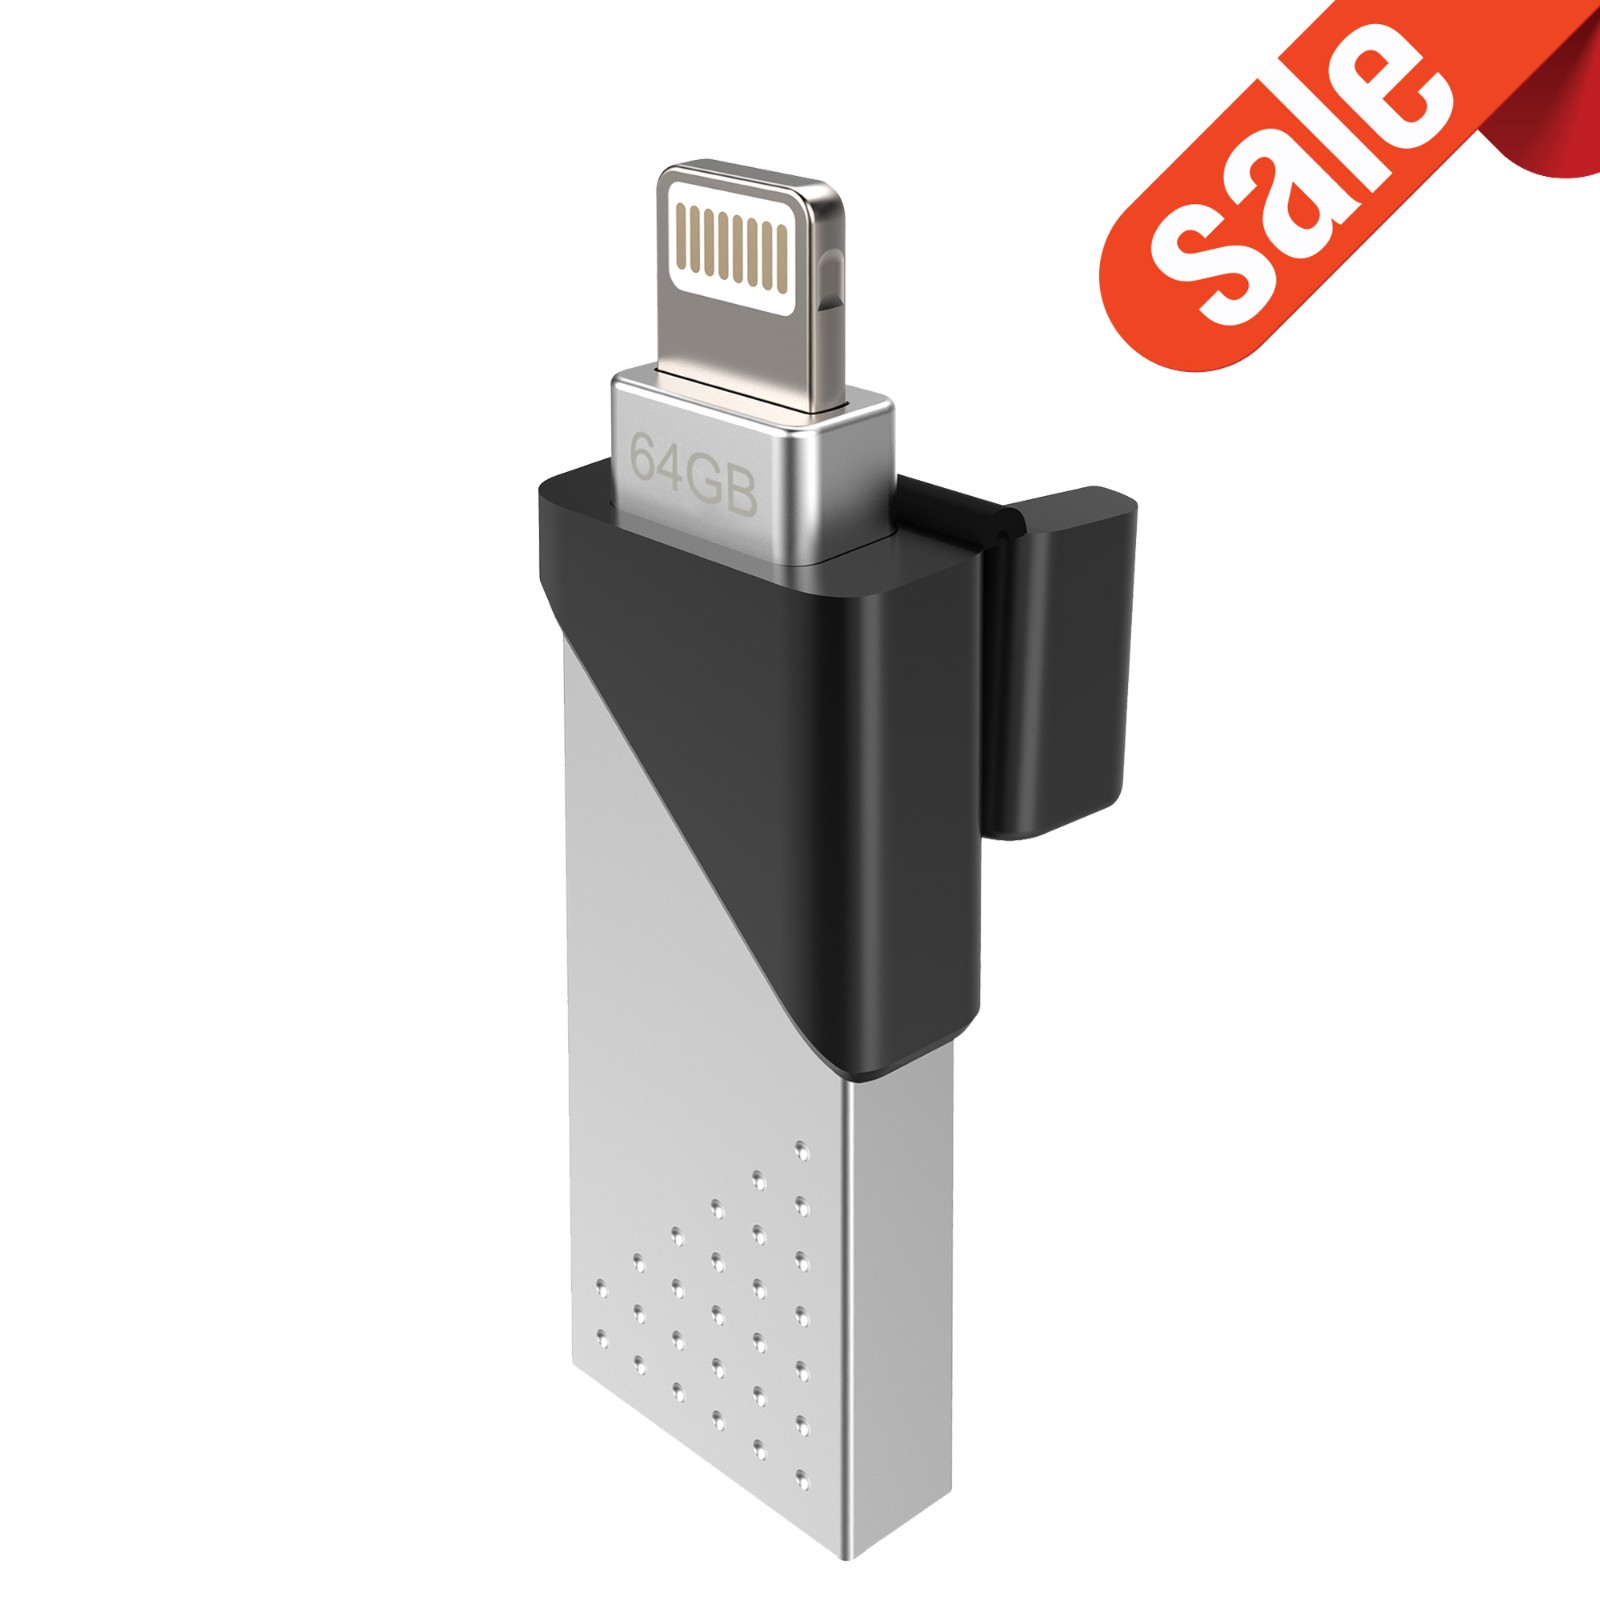 Silicon Power 64GB Z50 OTG Flash Drive for iPhone & iPad (Lightning/USB 3.1 Gen1)